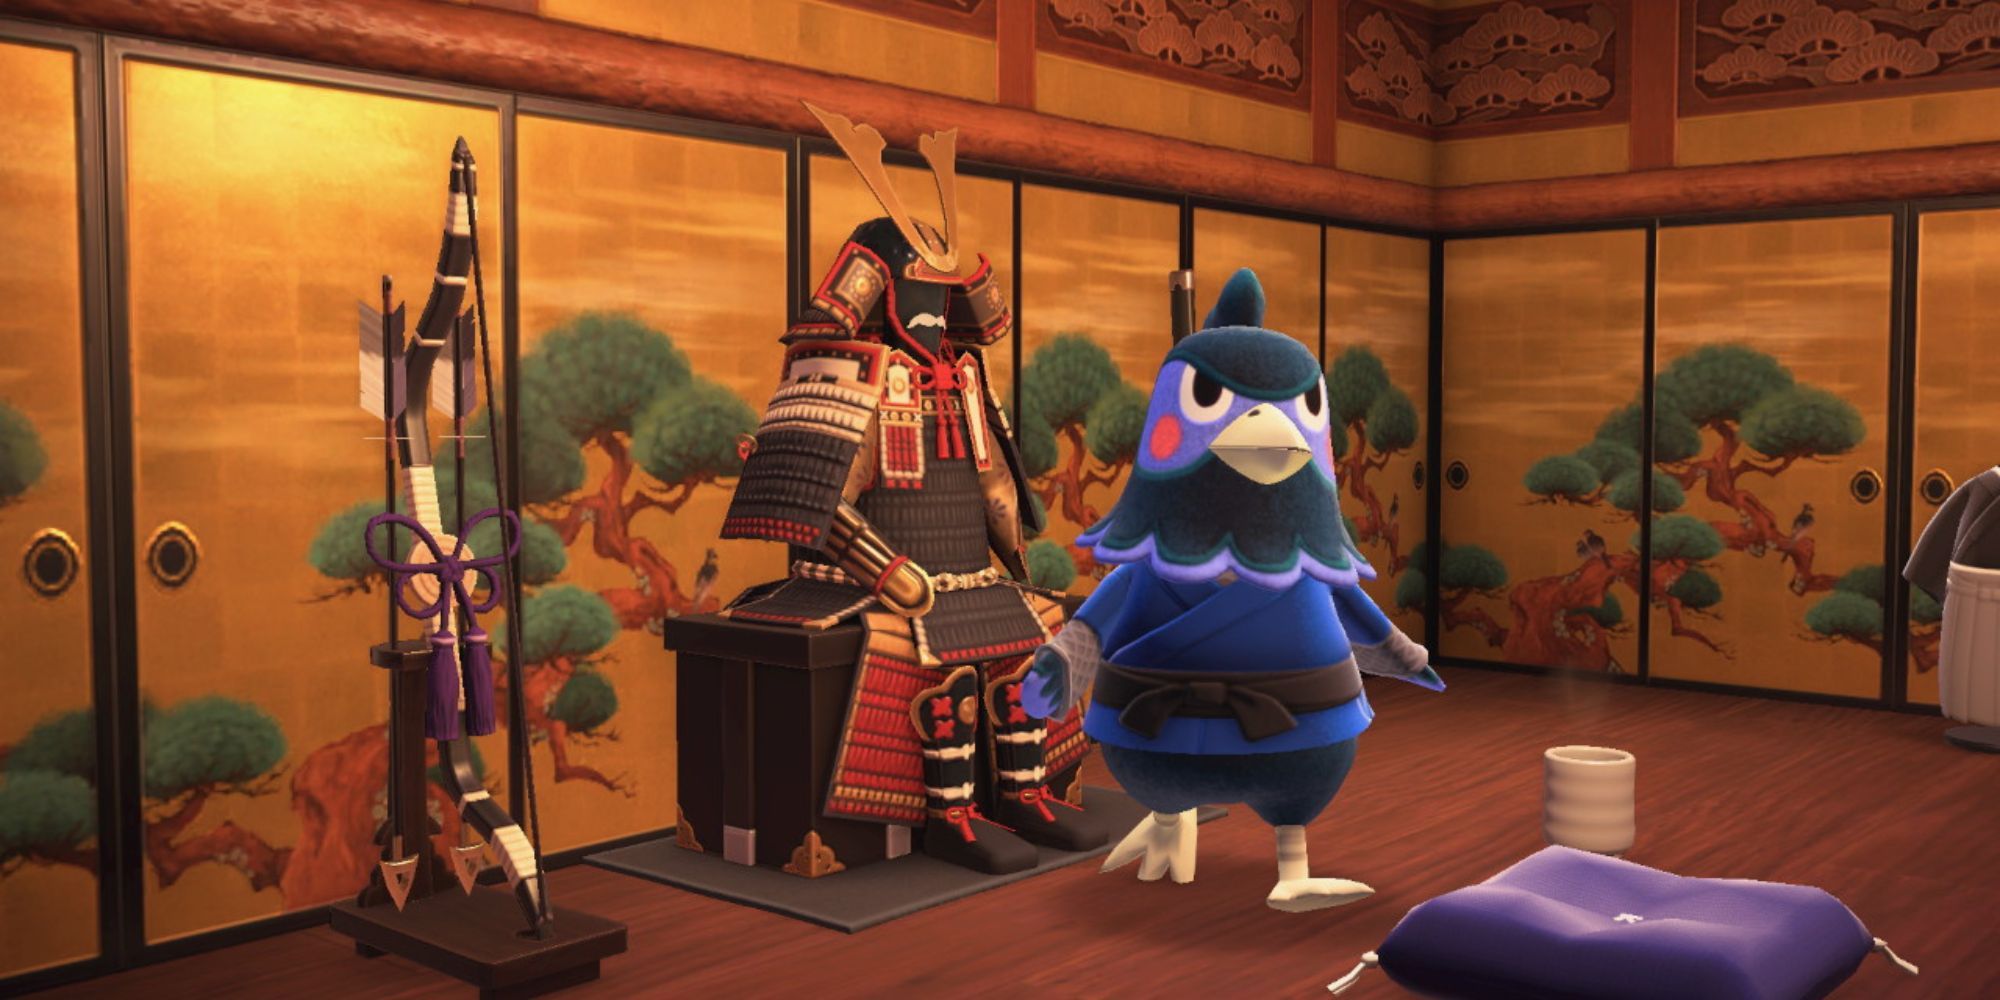 Ken walks by some samurai armor in his house